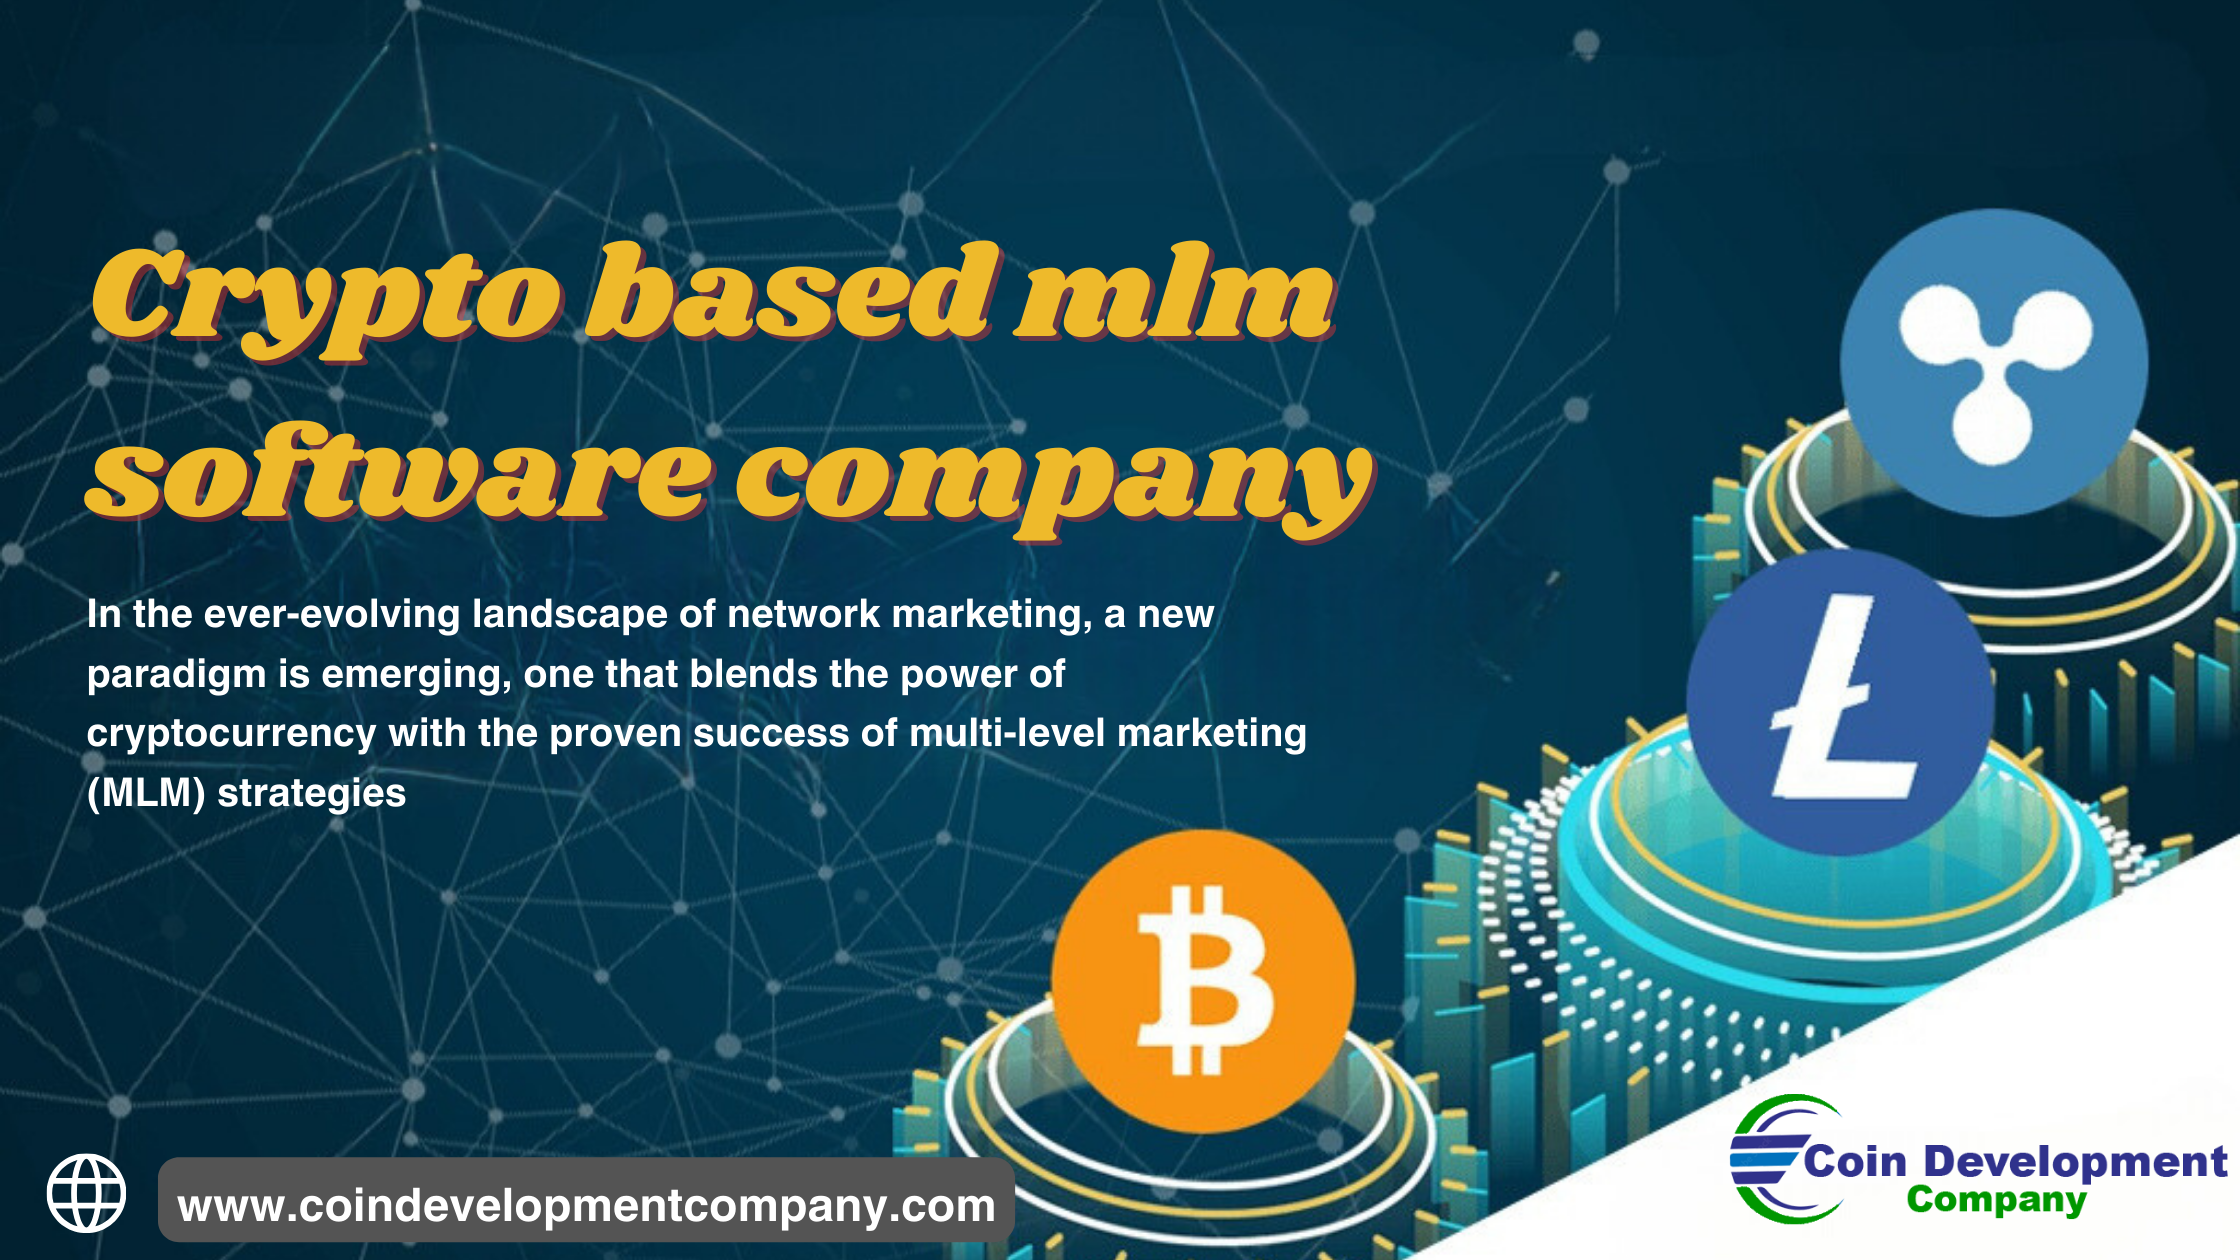 Crypto based mlm software company